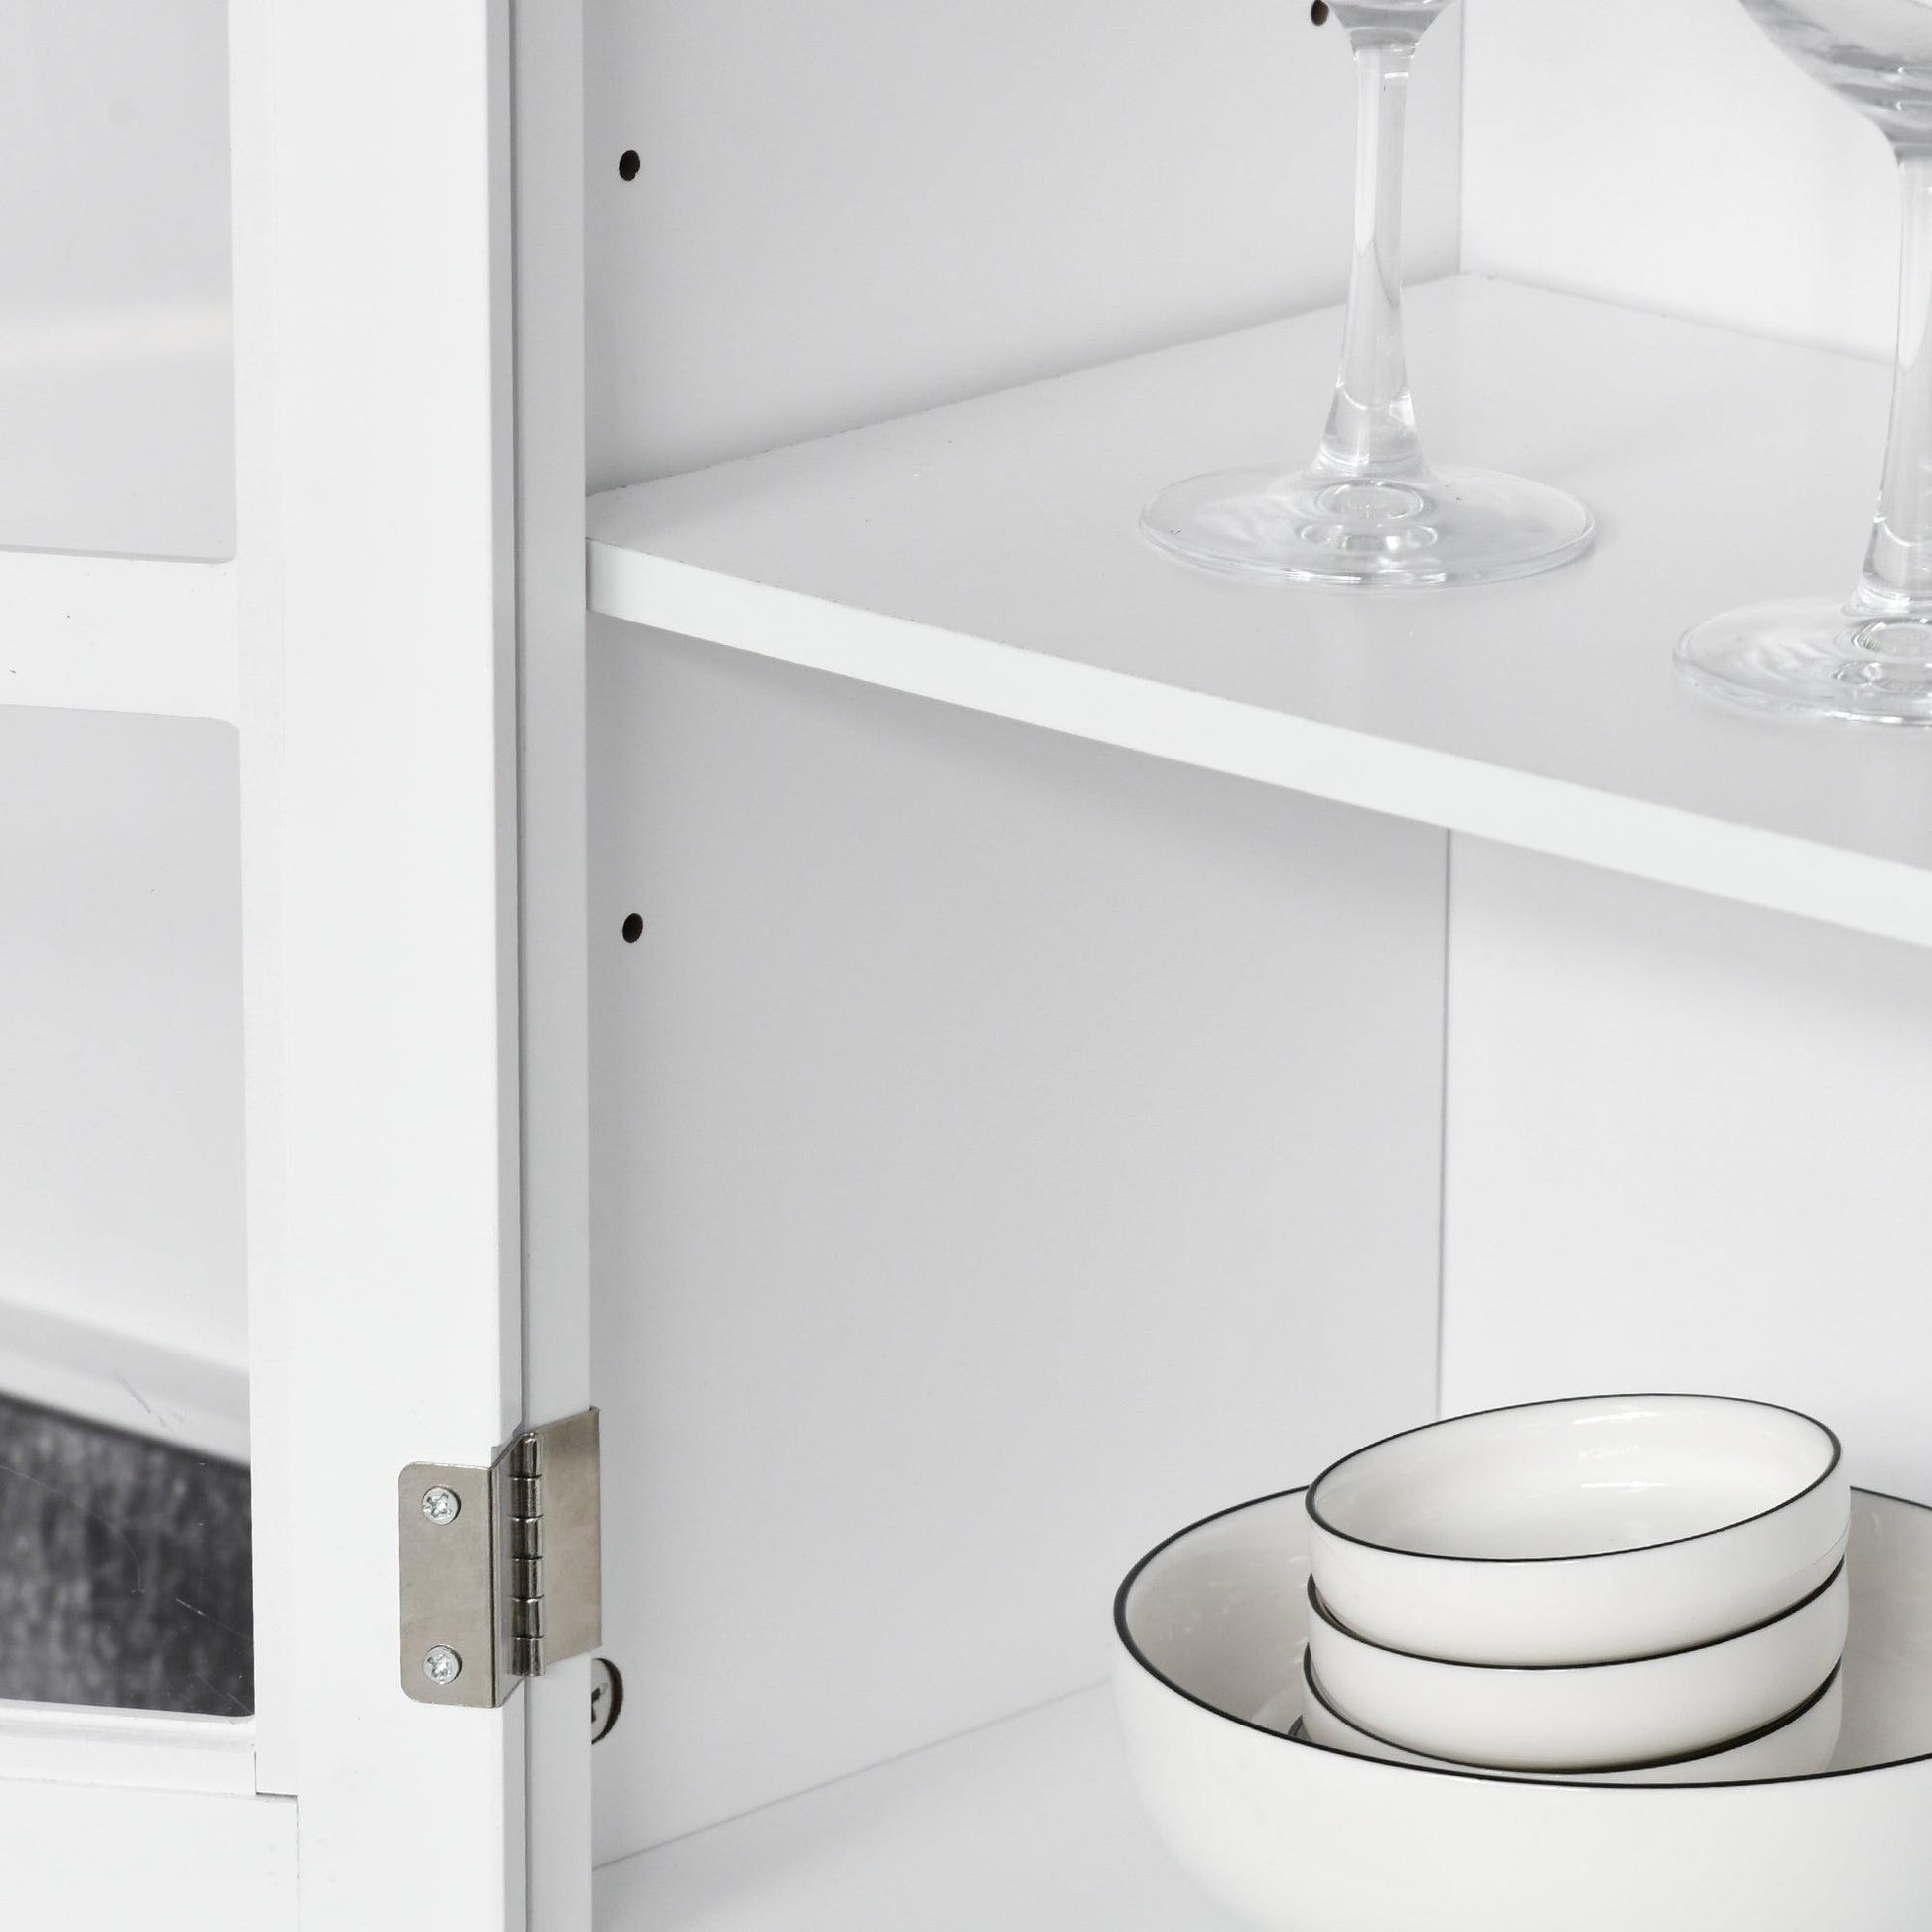 HOMCOM Modern White Kitchen Cupboard with Glass Doors and Drawers - ALL4U RETAILER LTD